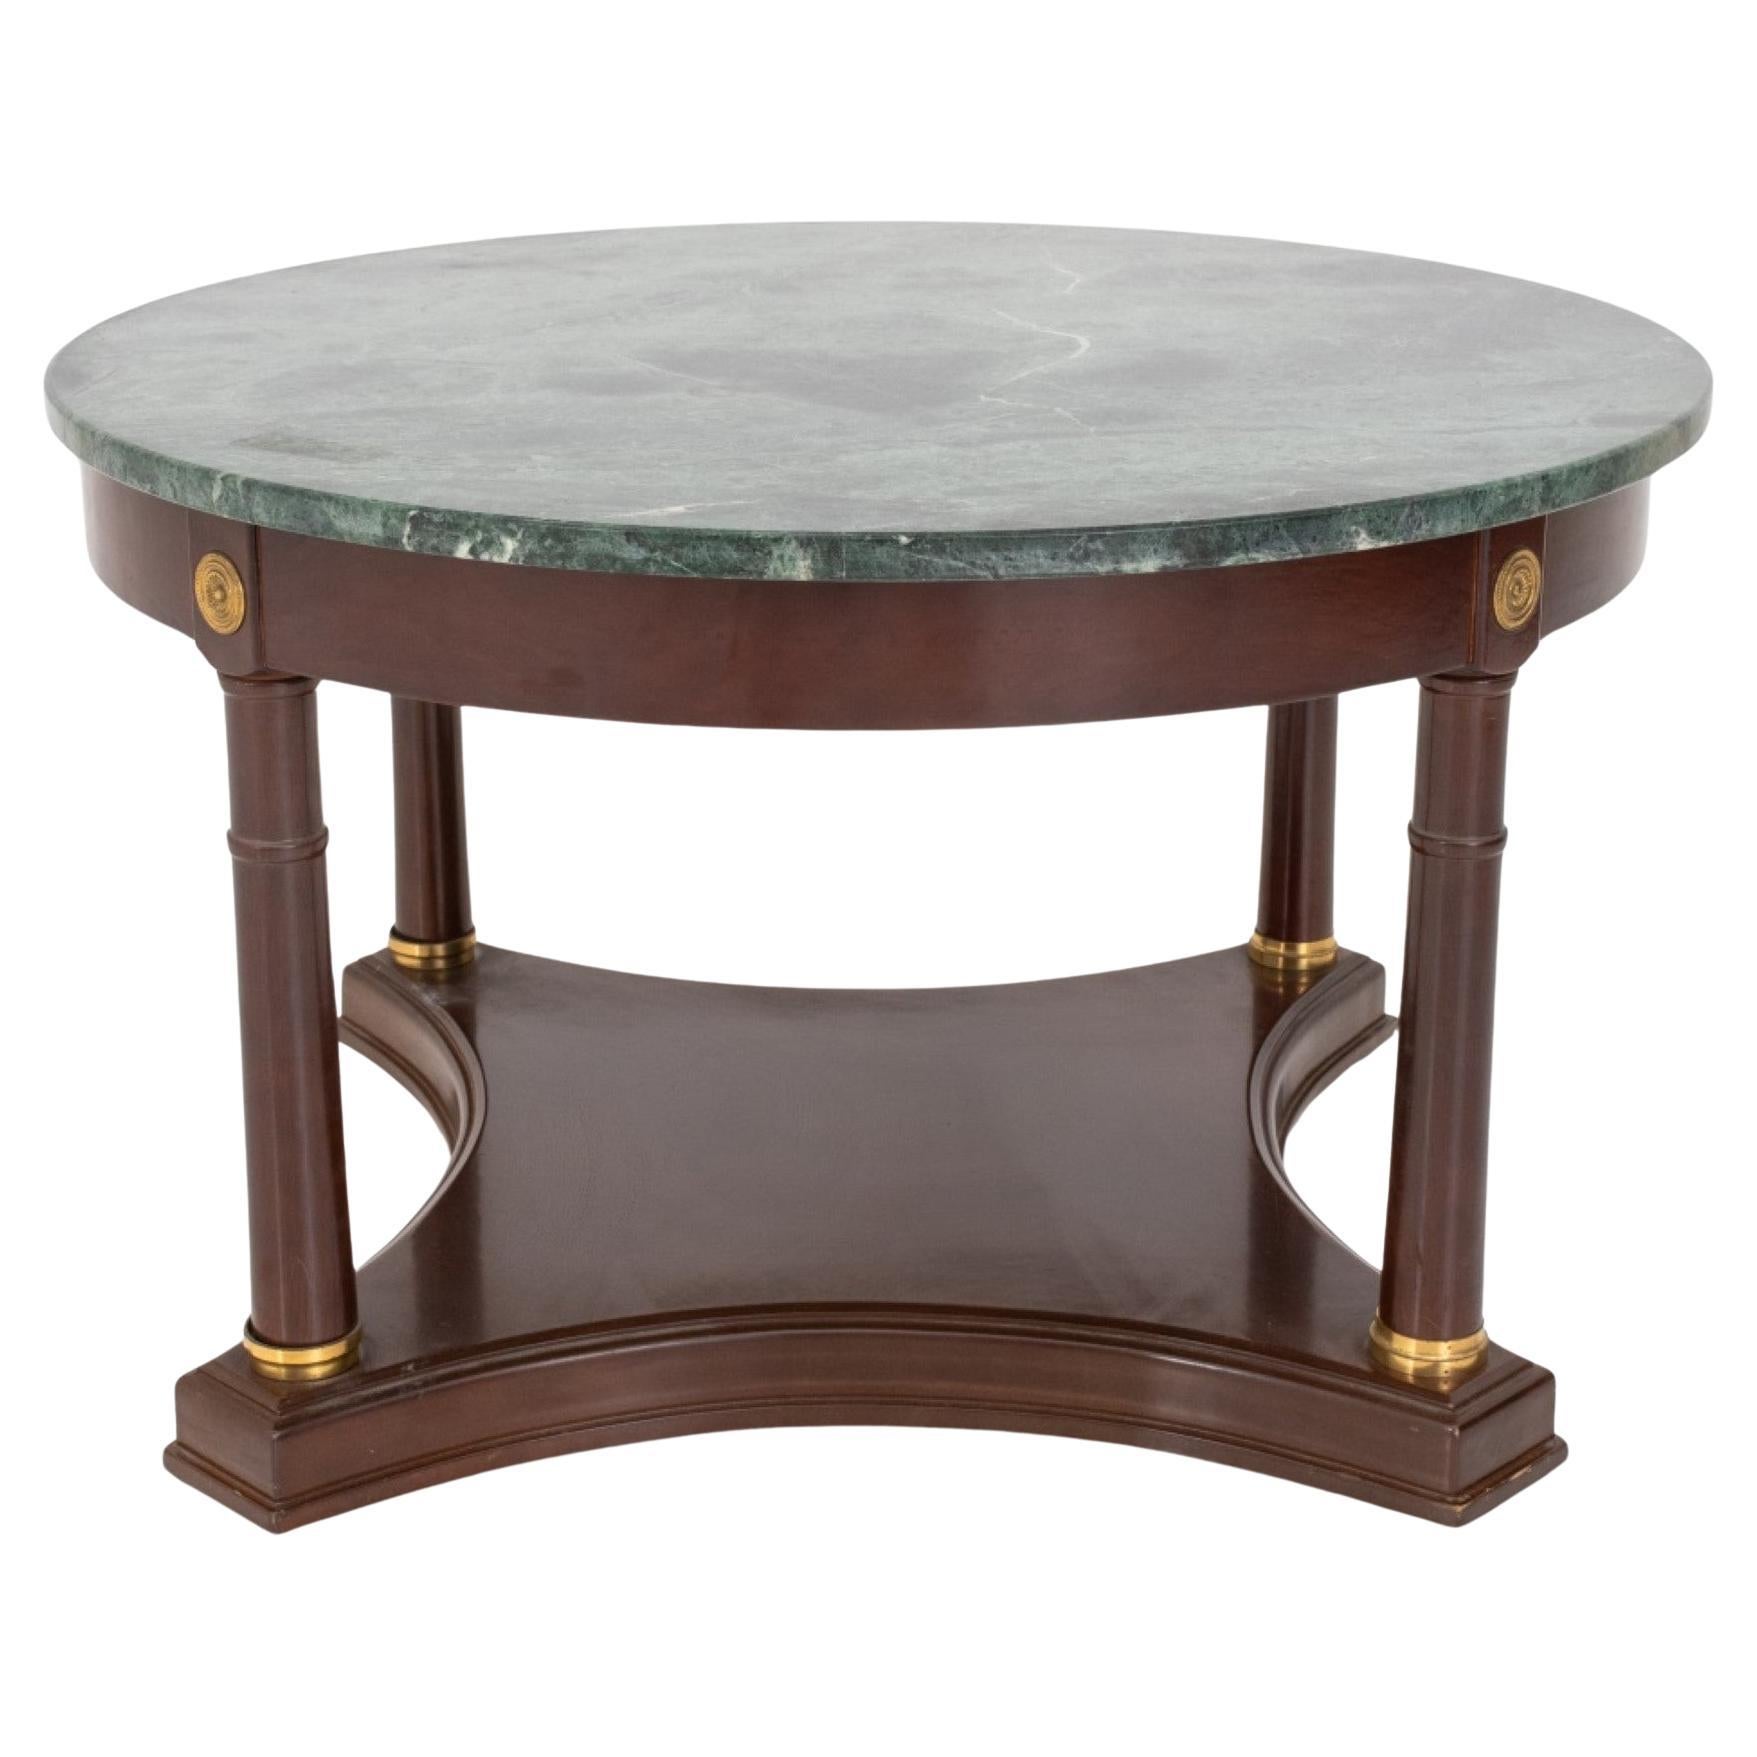 Baker Furniture Attrib Table basse avec plateau en marbre en vente